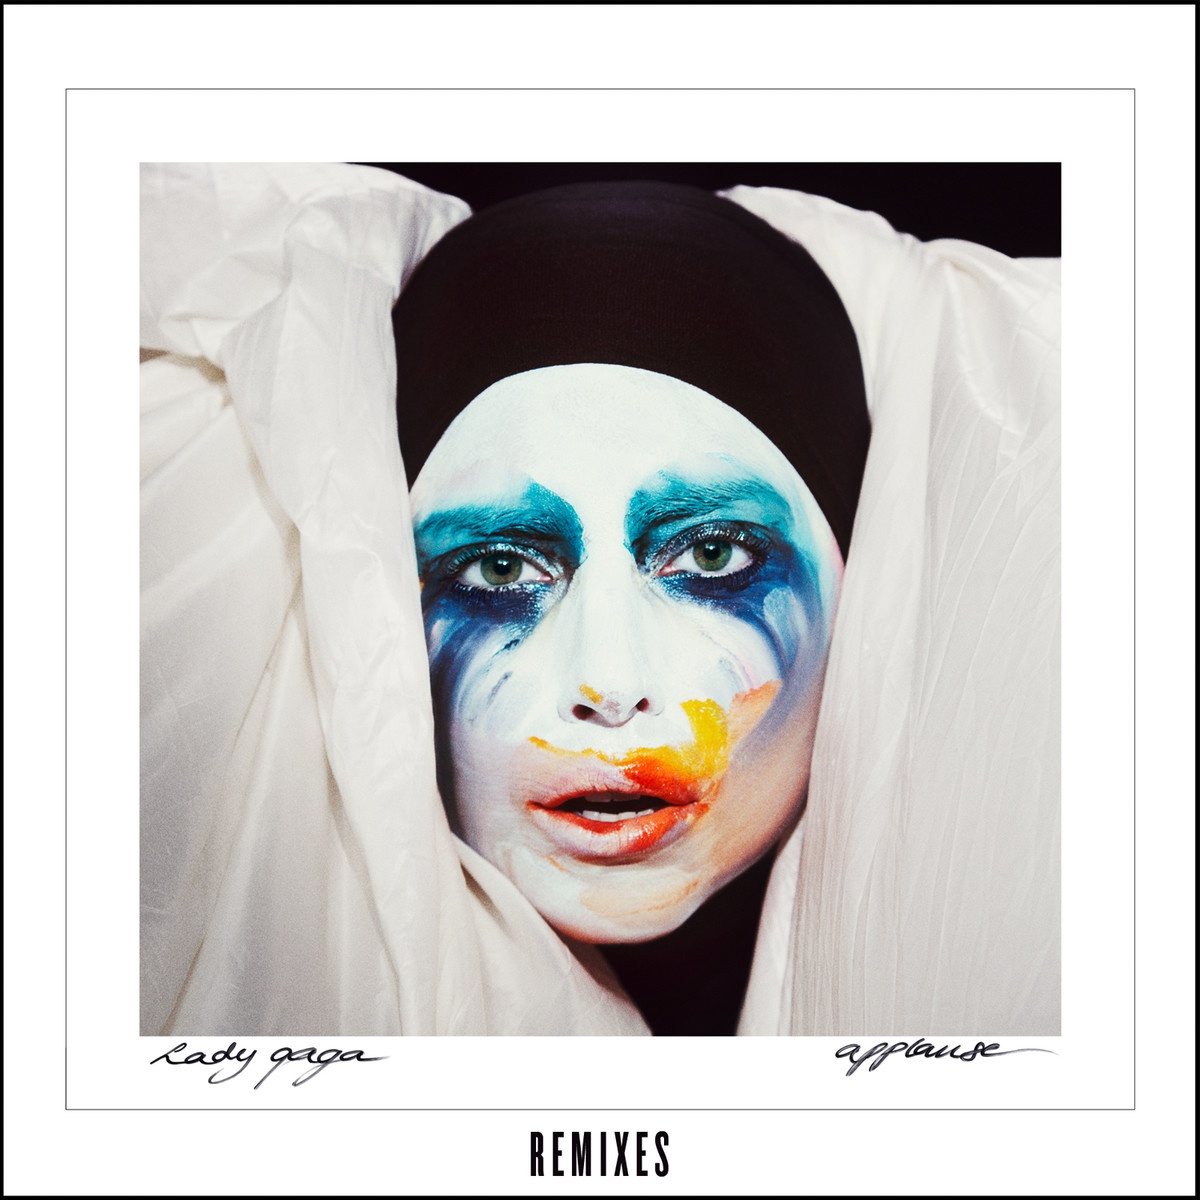 Applause (Goldhouse Remix)